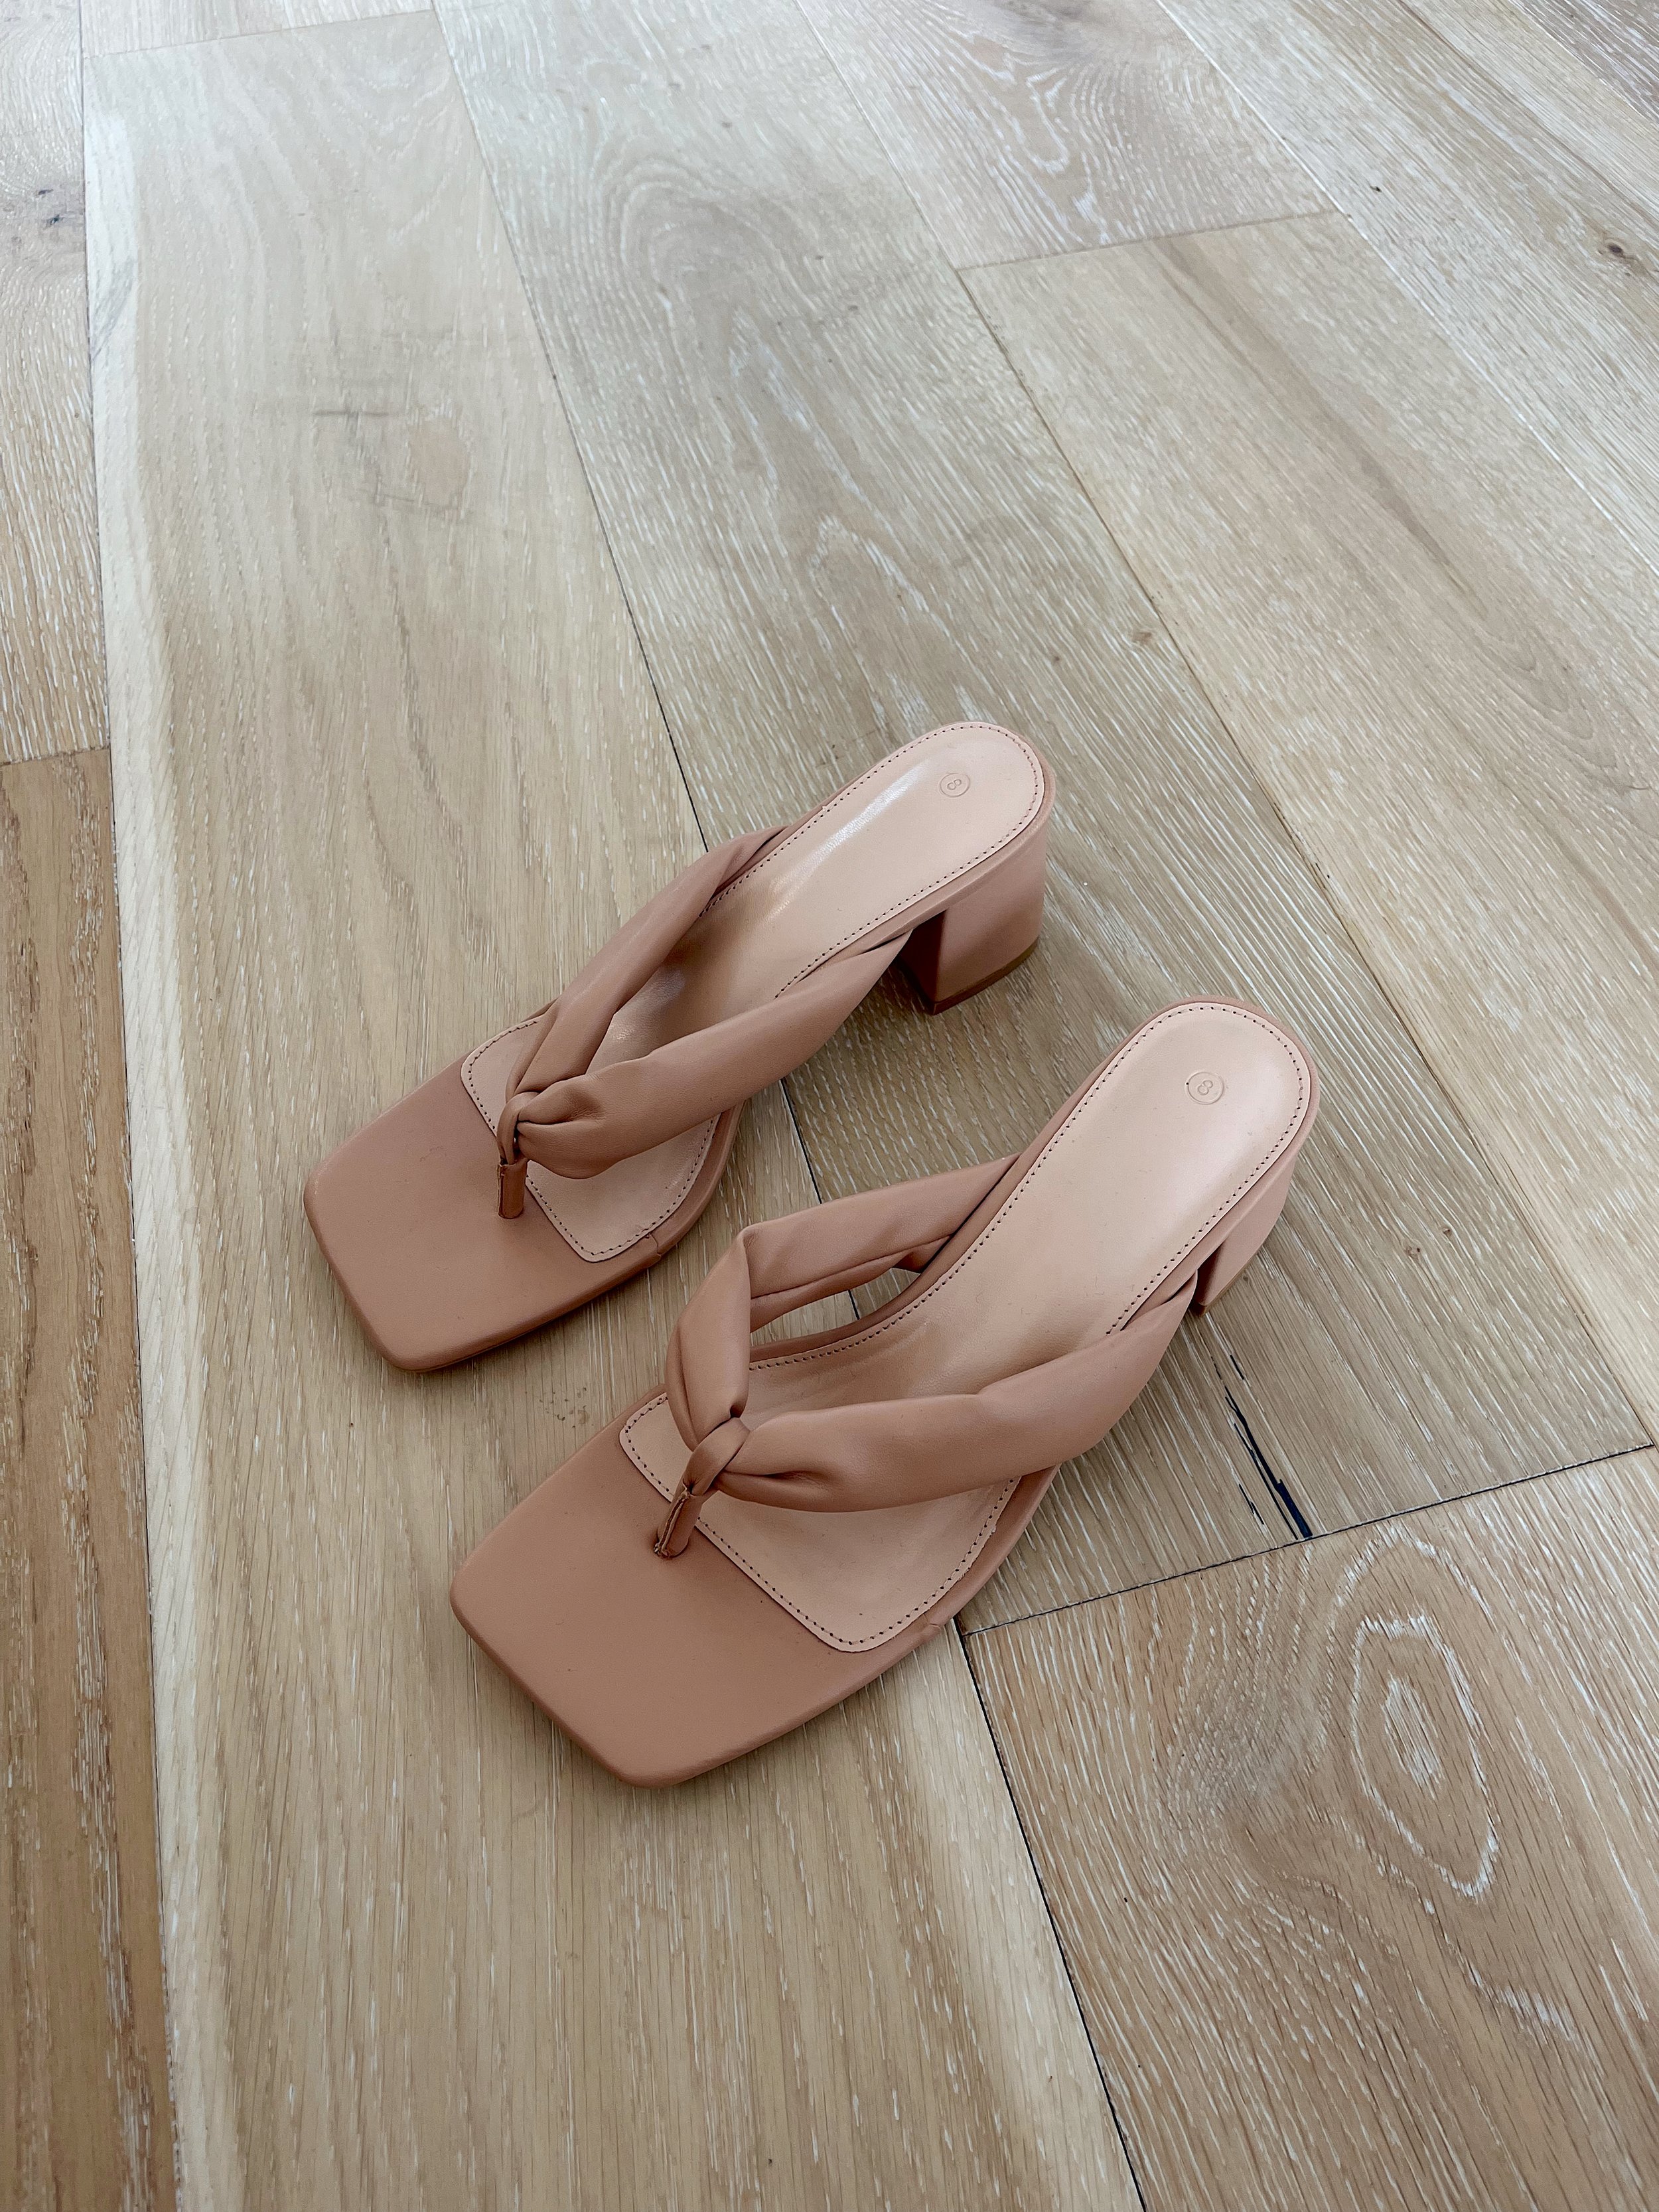 amazon heeled sandals.JPG